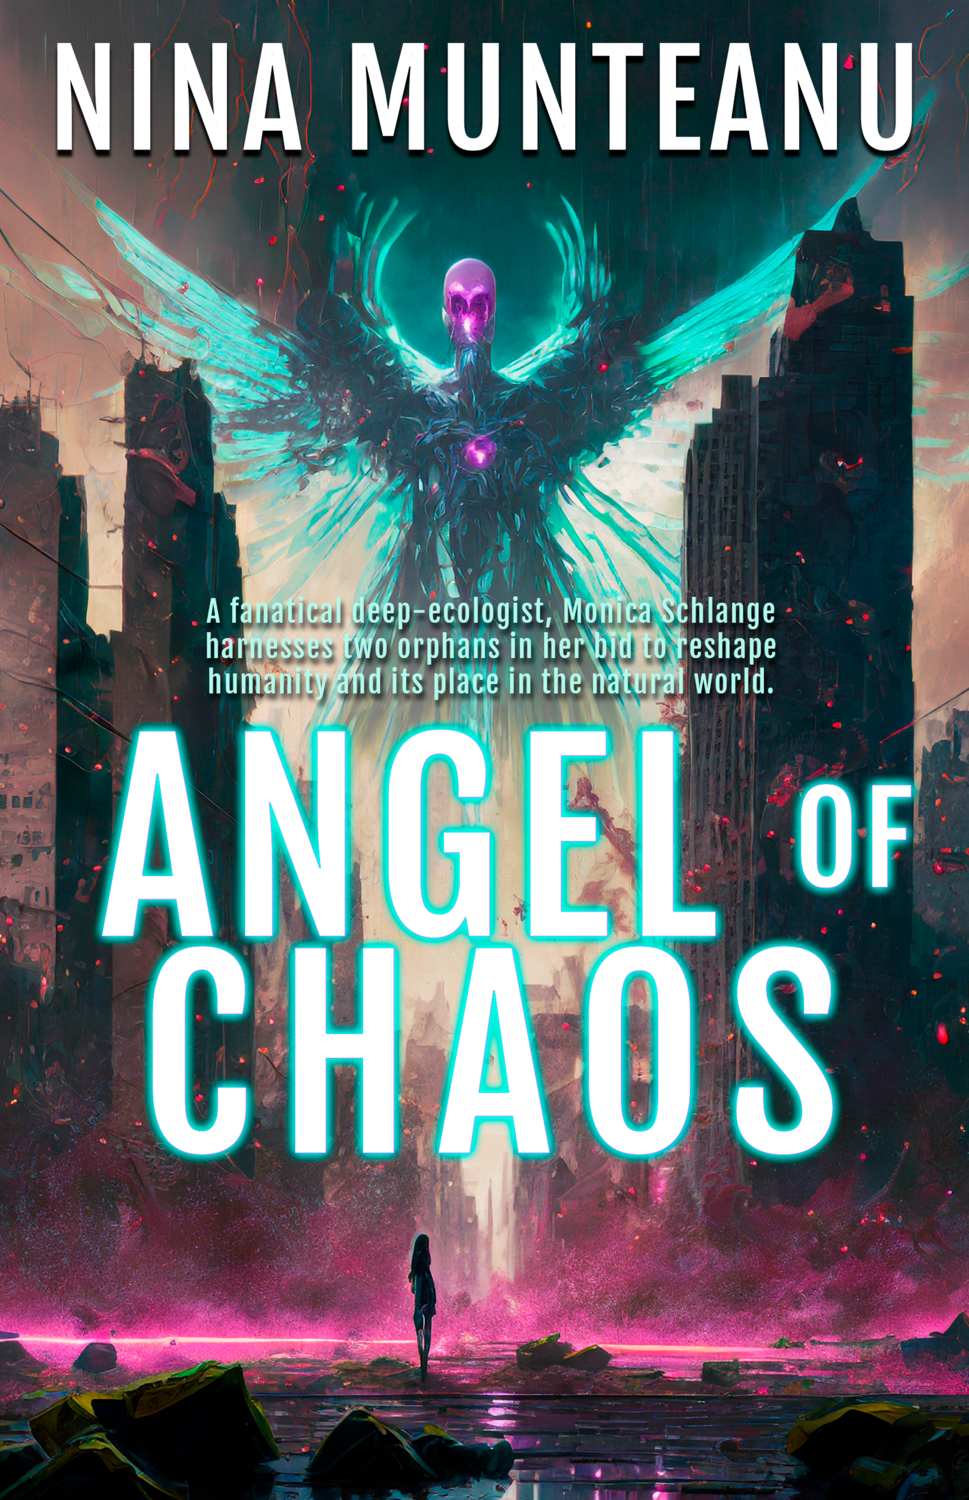 Angel of Chaos (Ebook) by Nina Munteanu